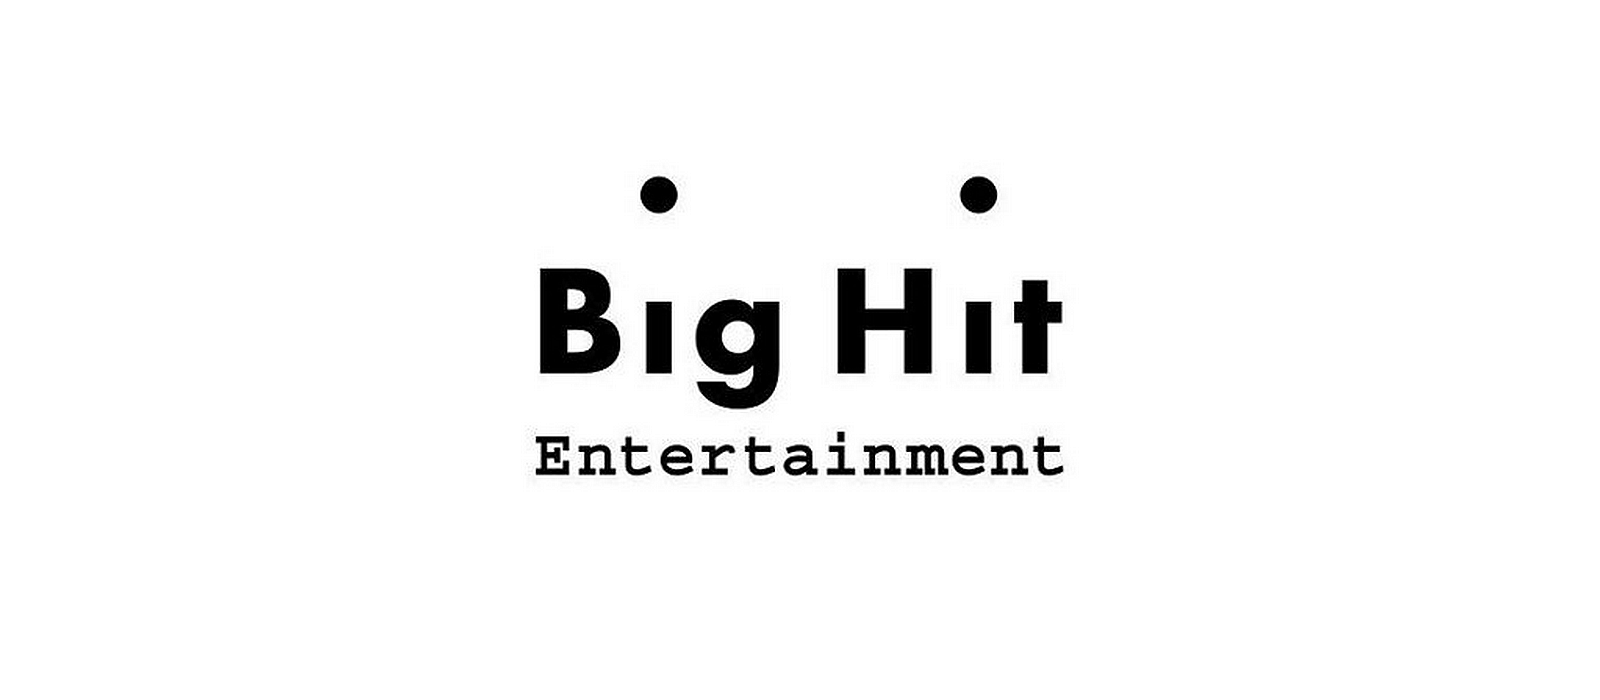 Биг хит калории. Big Hit логотип. Пледис Интертеймент. Биг хит Интертеймент. Big Hit Entertainment pledis Entertainment logo.